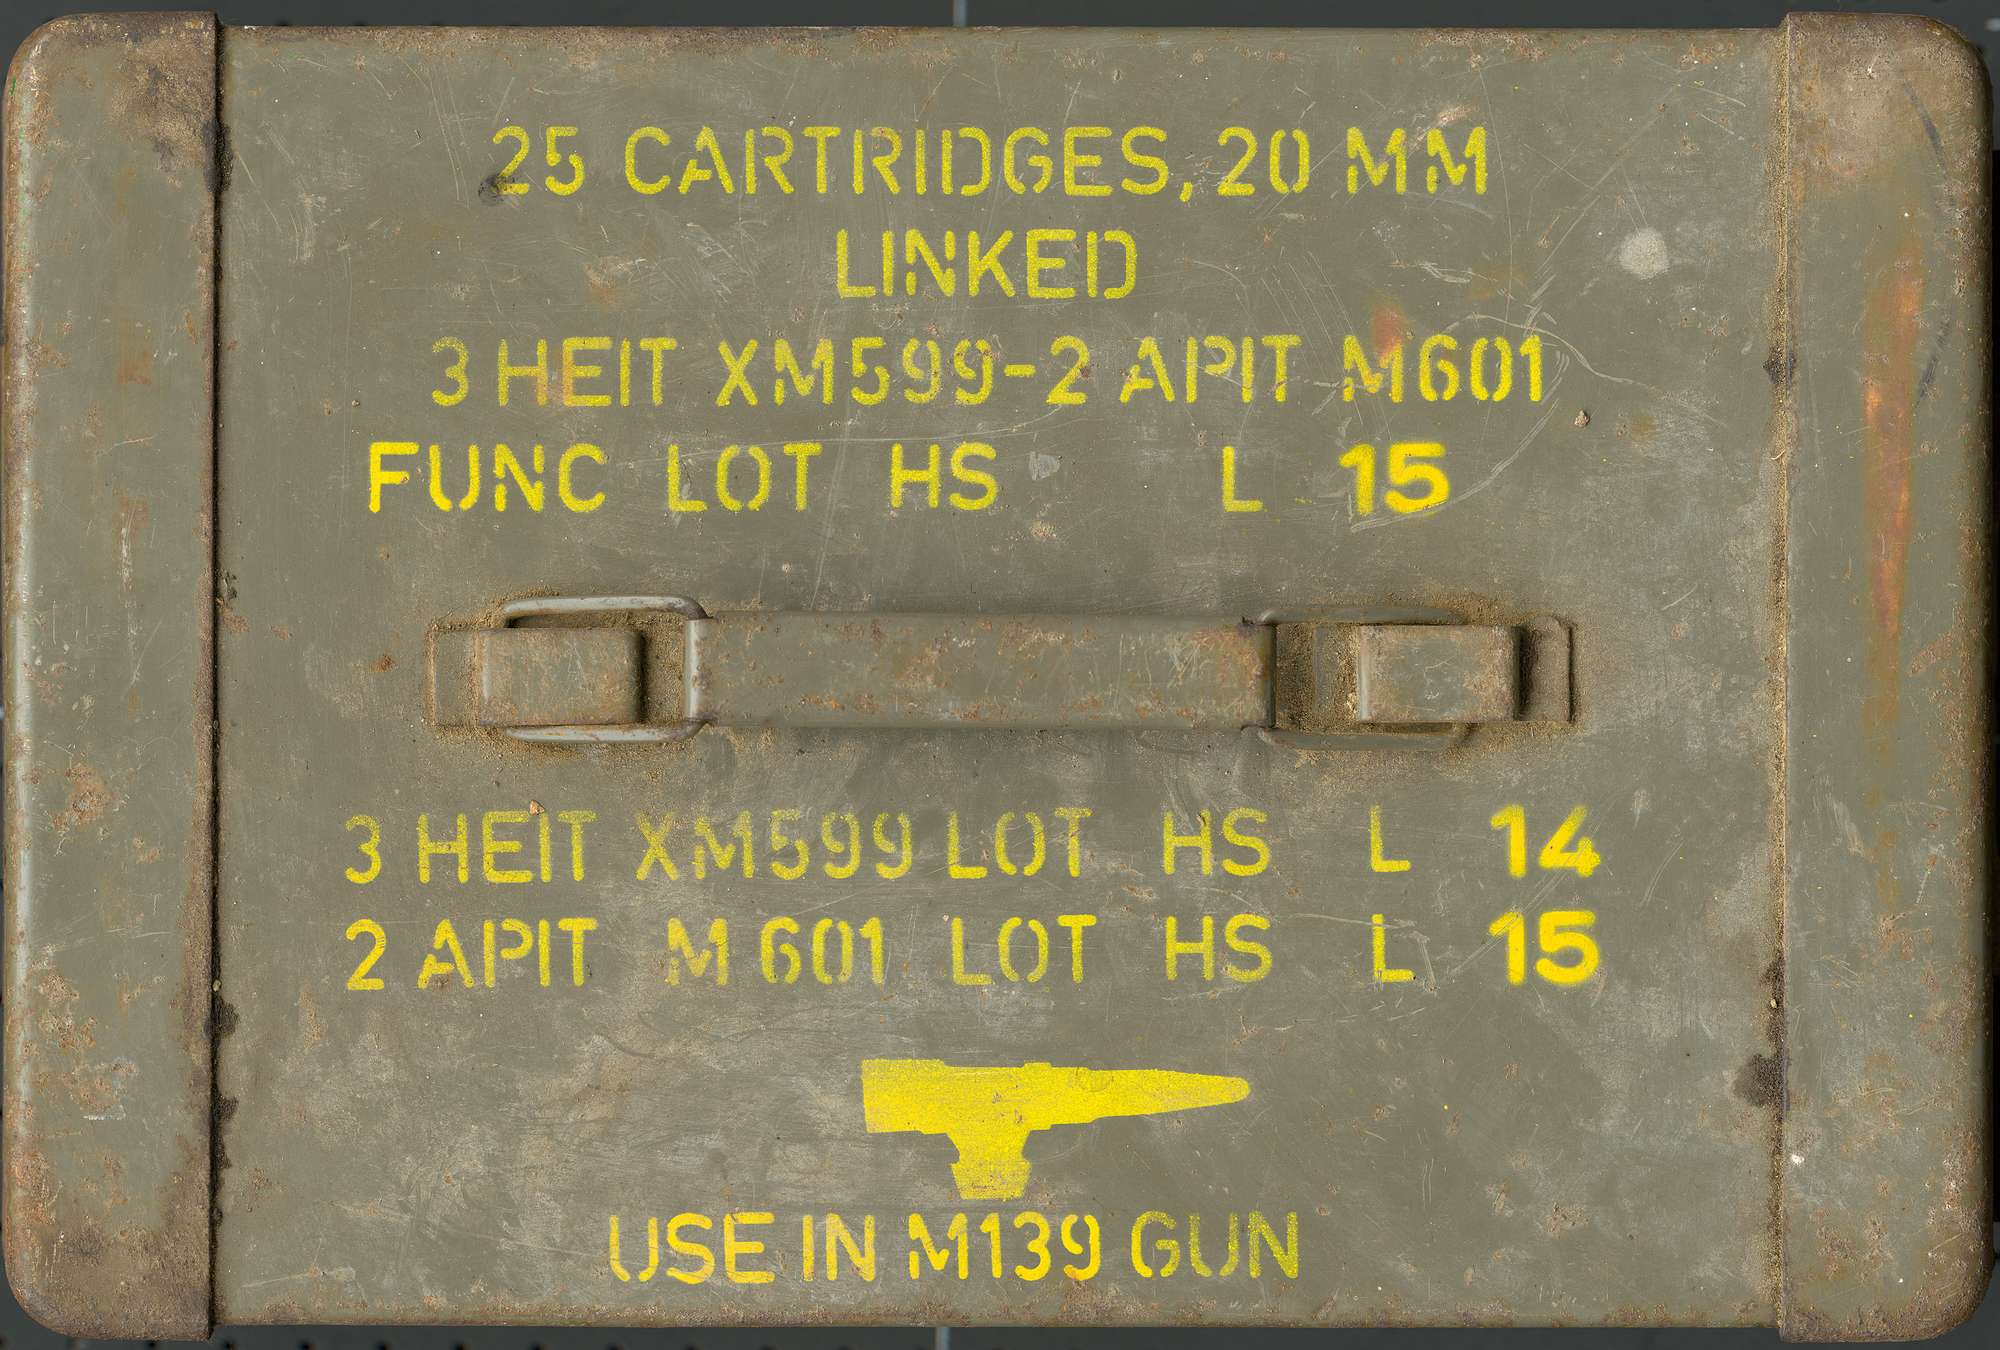             Muurschildering detail cartridge box
        